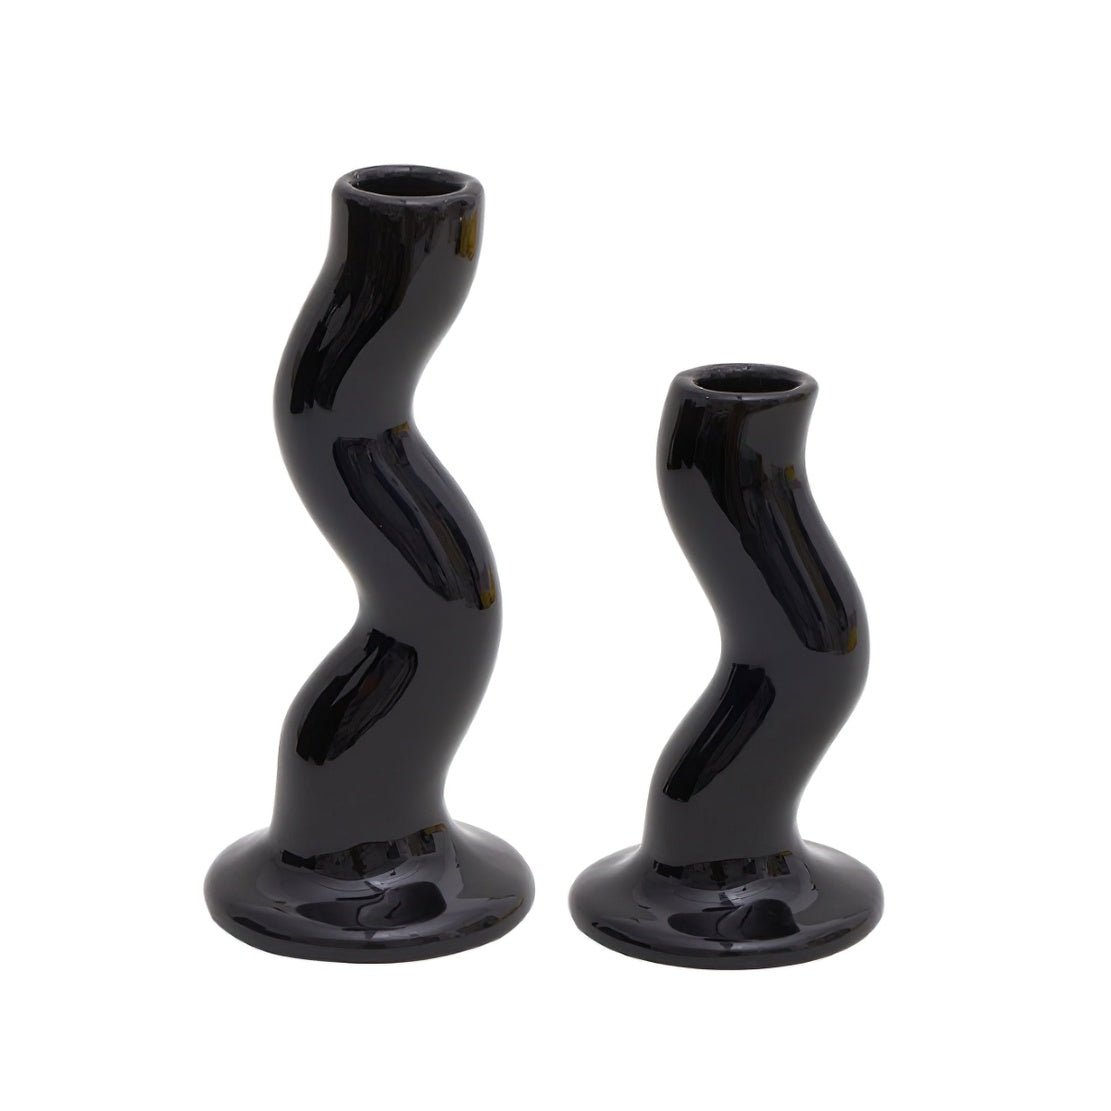 Black, ceramic, wiggle candlestick holders